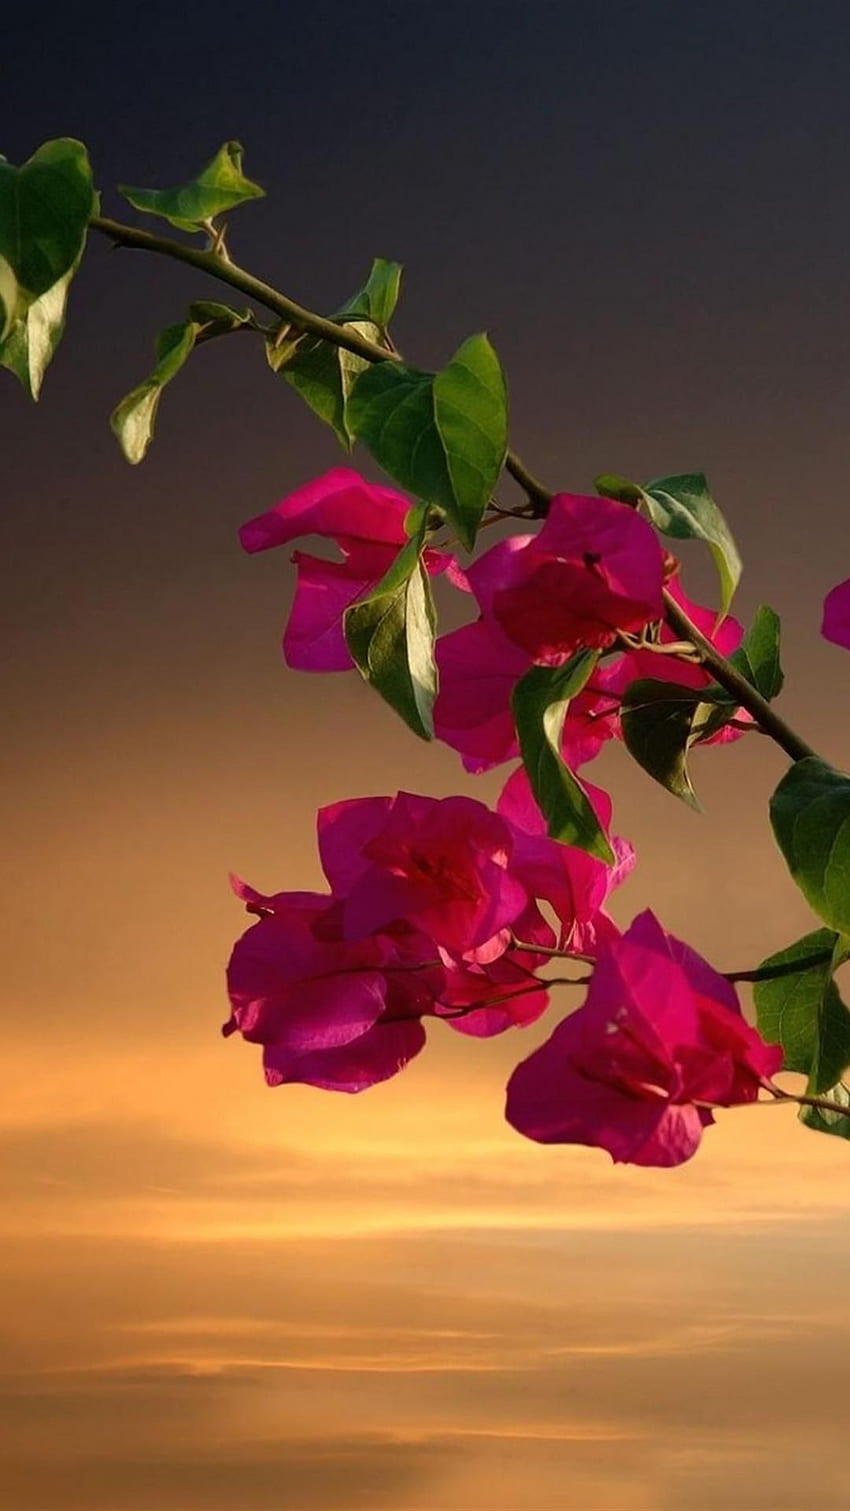 Bougainvillea verzweigt sich Blätter-Himmel-Sonnenuntergang iPhone 6 Plus. Kalender, iPhone 6 plus, Beste Blume, Bougainvellia HD-Handy-Hintergrundbild